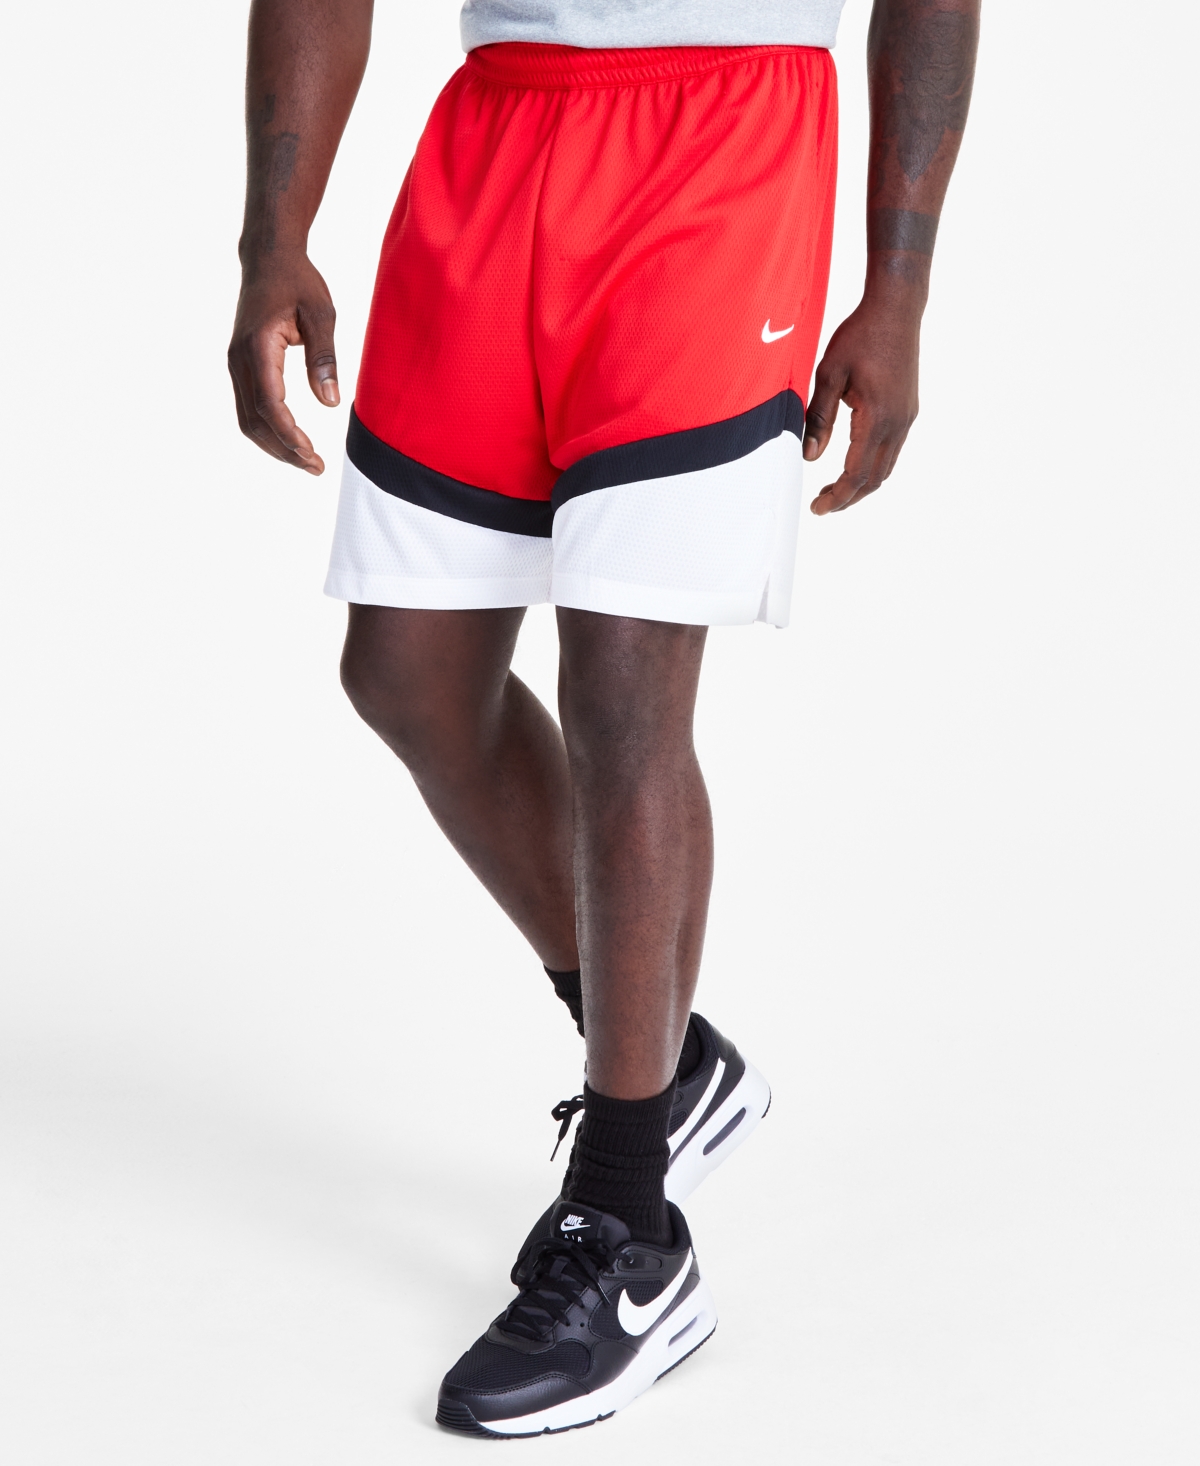 Icon Men's Dri-fit Drawstring 8" Basketball Shorts - University Red/white/black/white